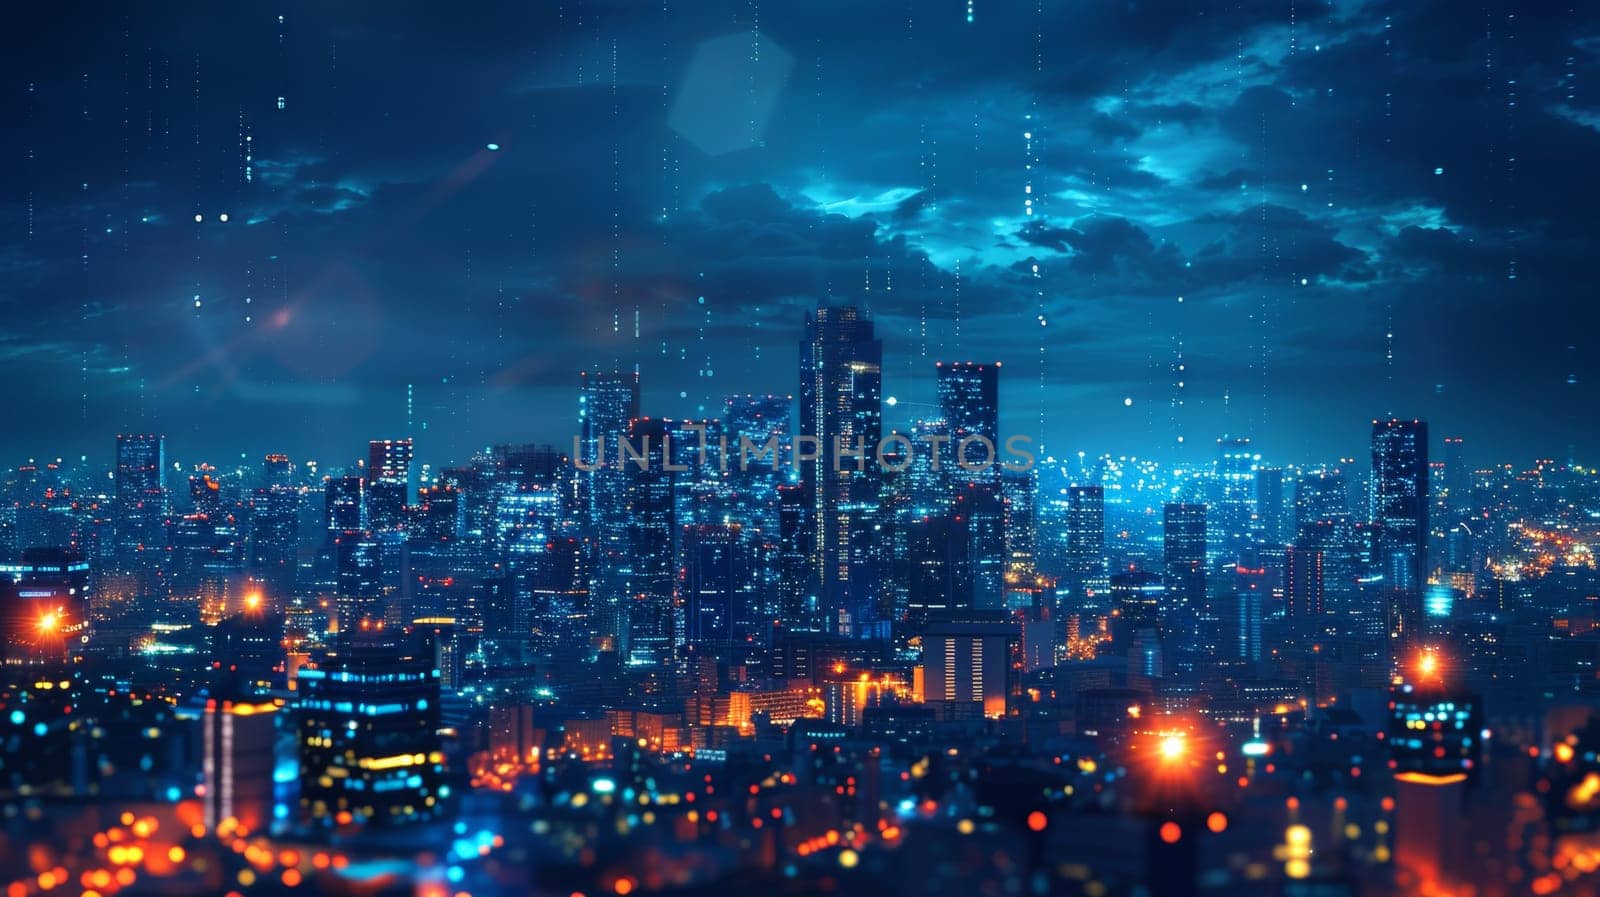 A city skyline lit up at night with a blue sky